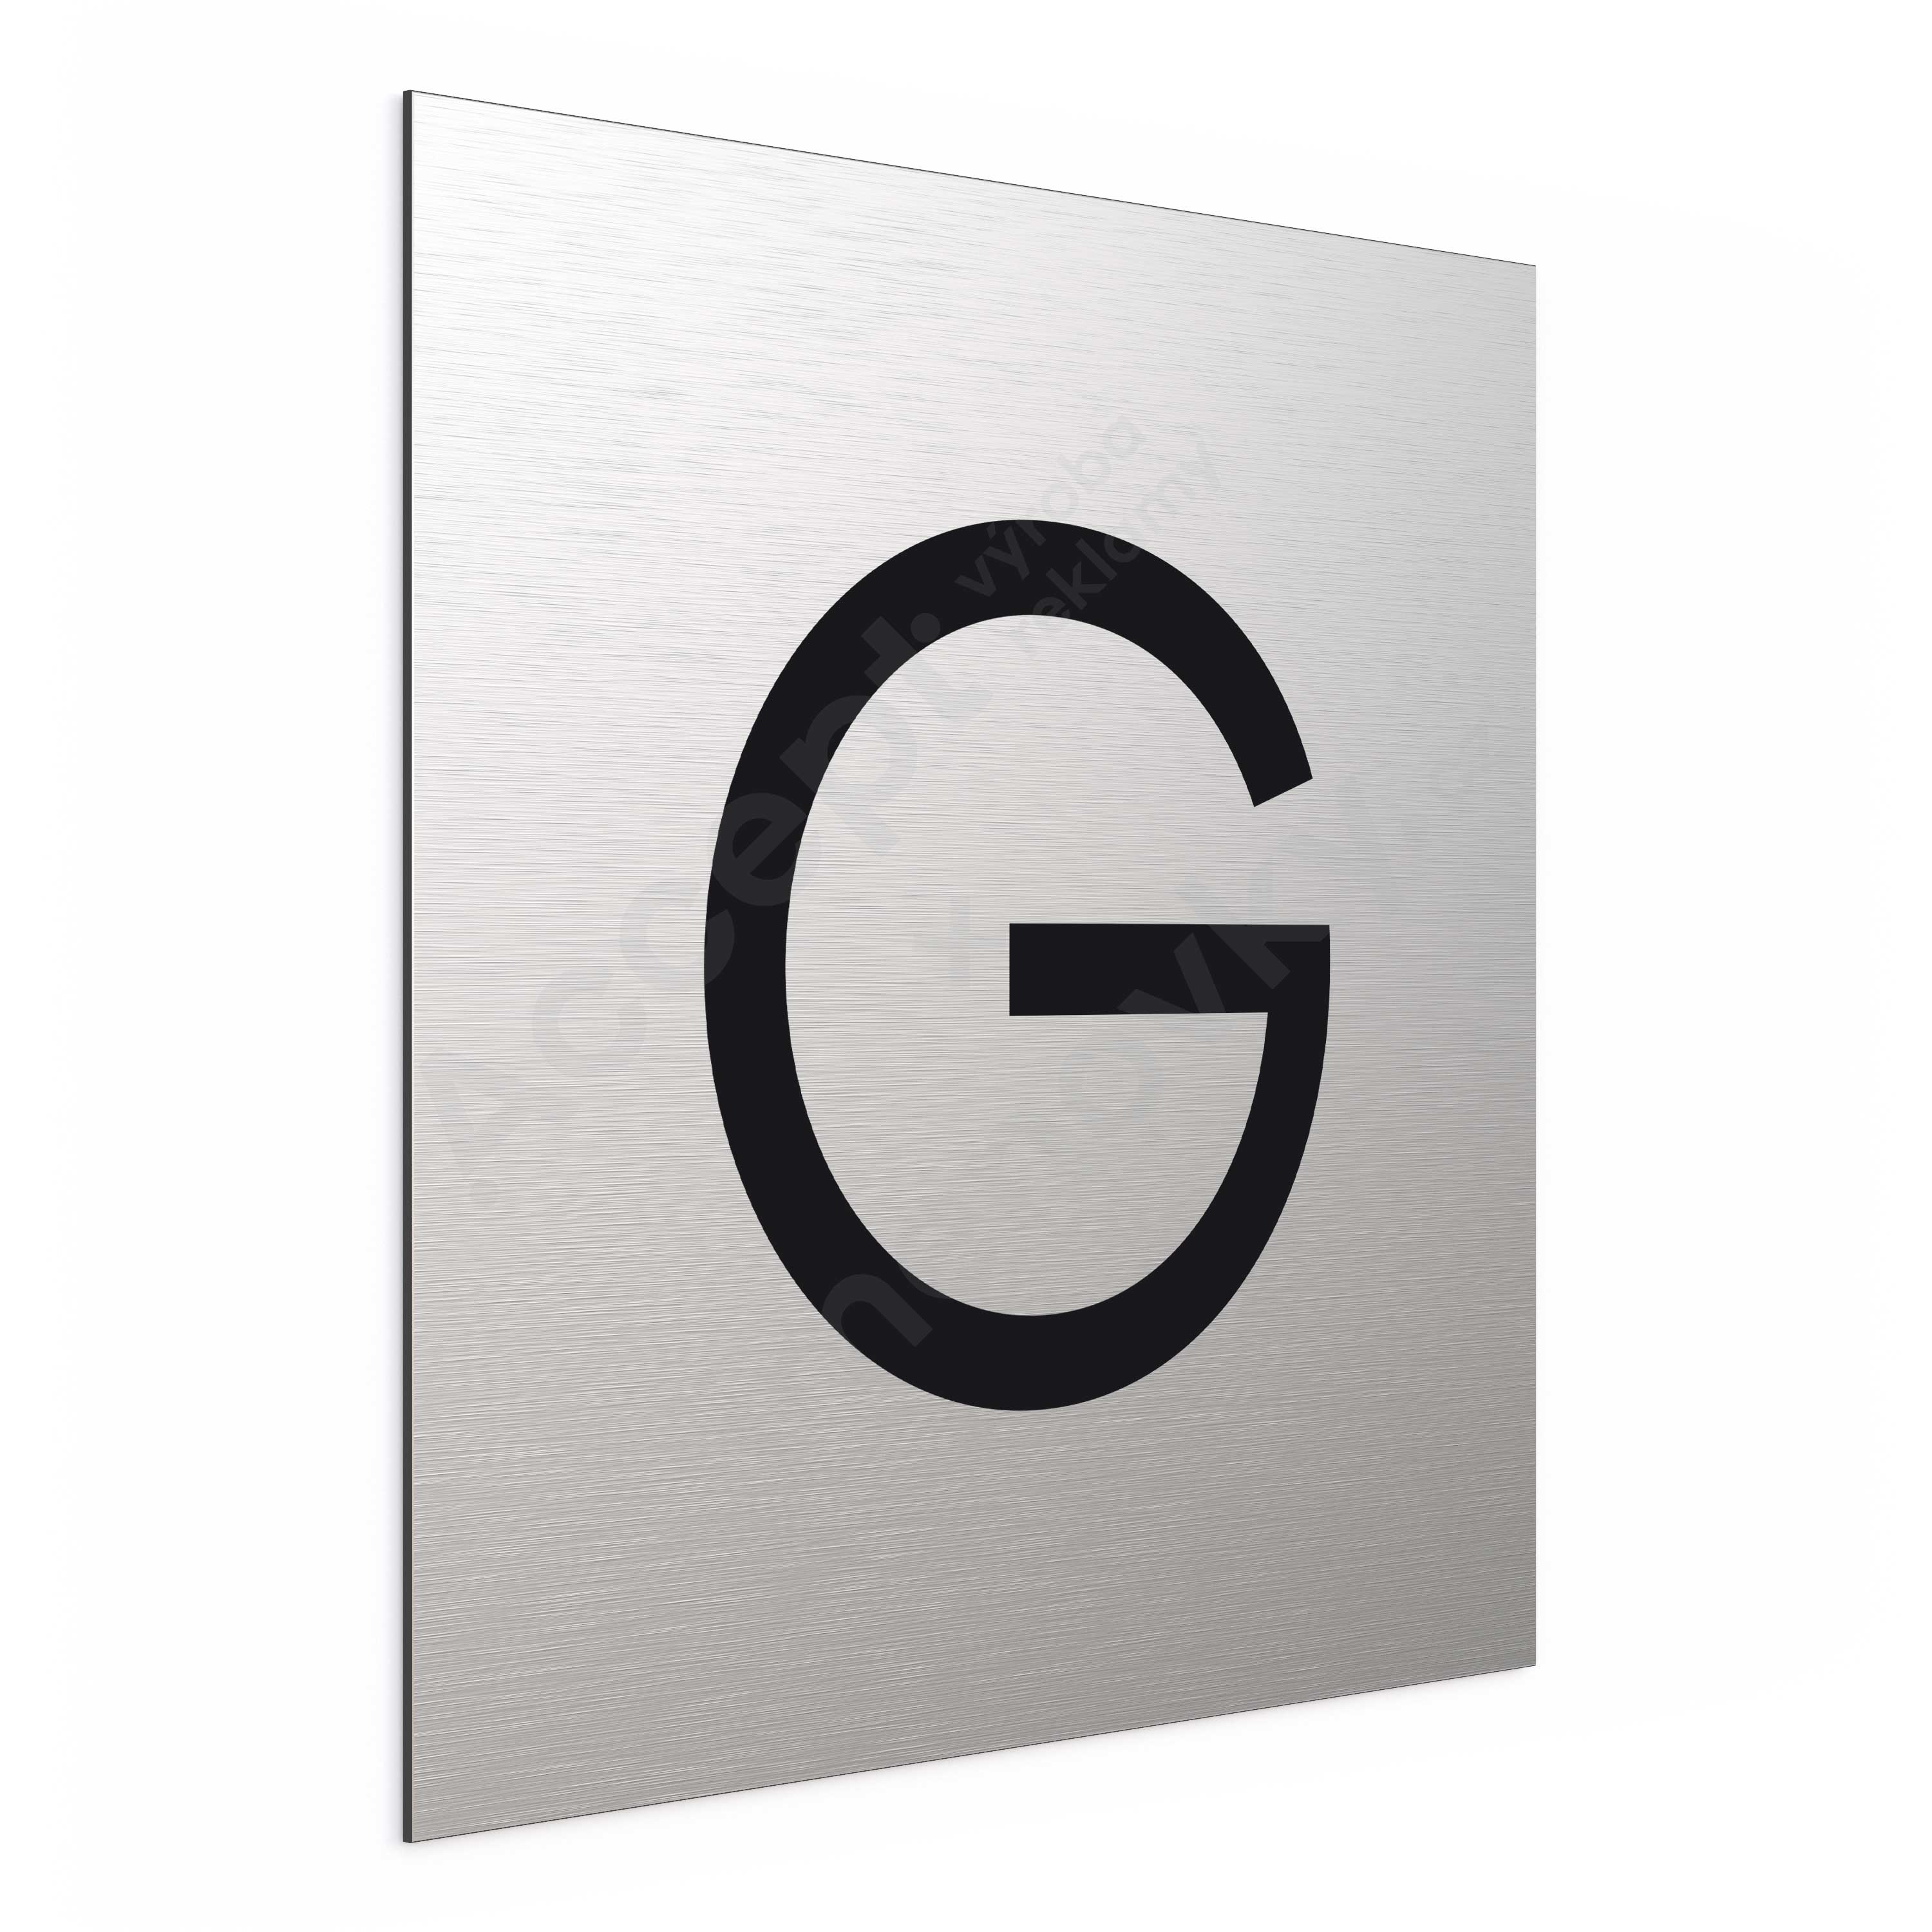 Označení podlaží - písmeno "G" - stříbrná tabulka - černý popis